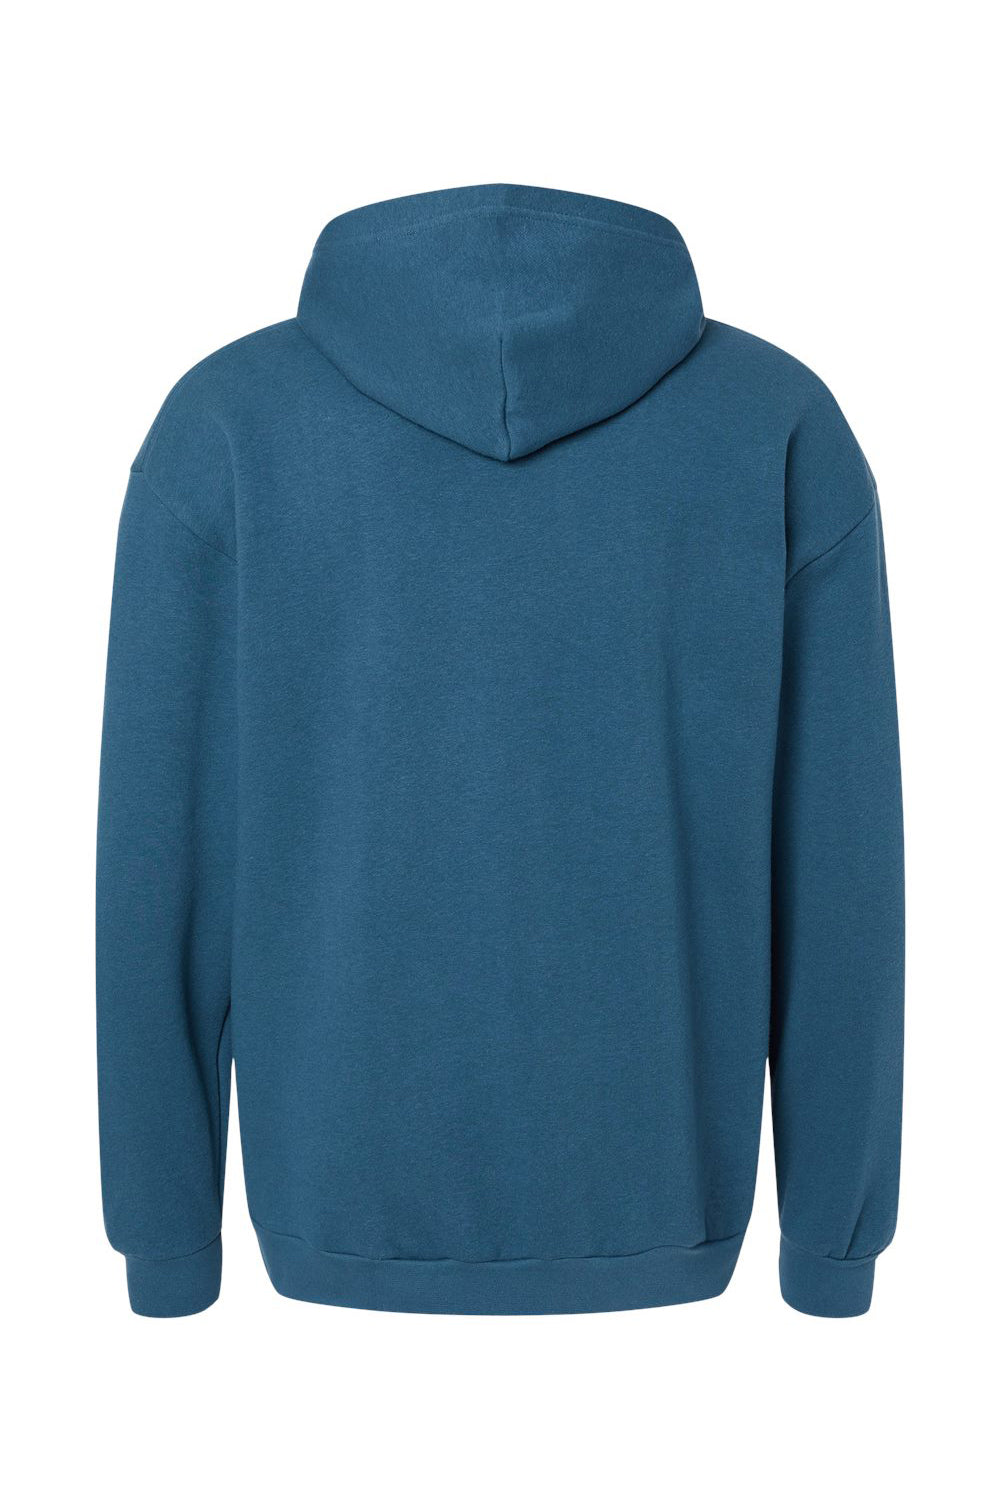 American Apparel RF498 Mens ReFlex Fleece Hooded Sweatshirt Hoodie Sea Blue Flat Back